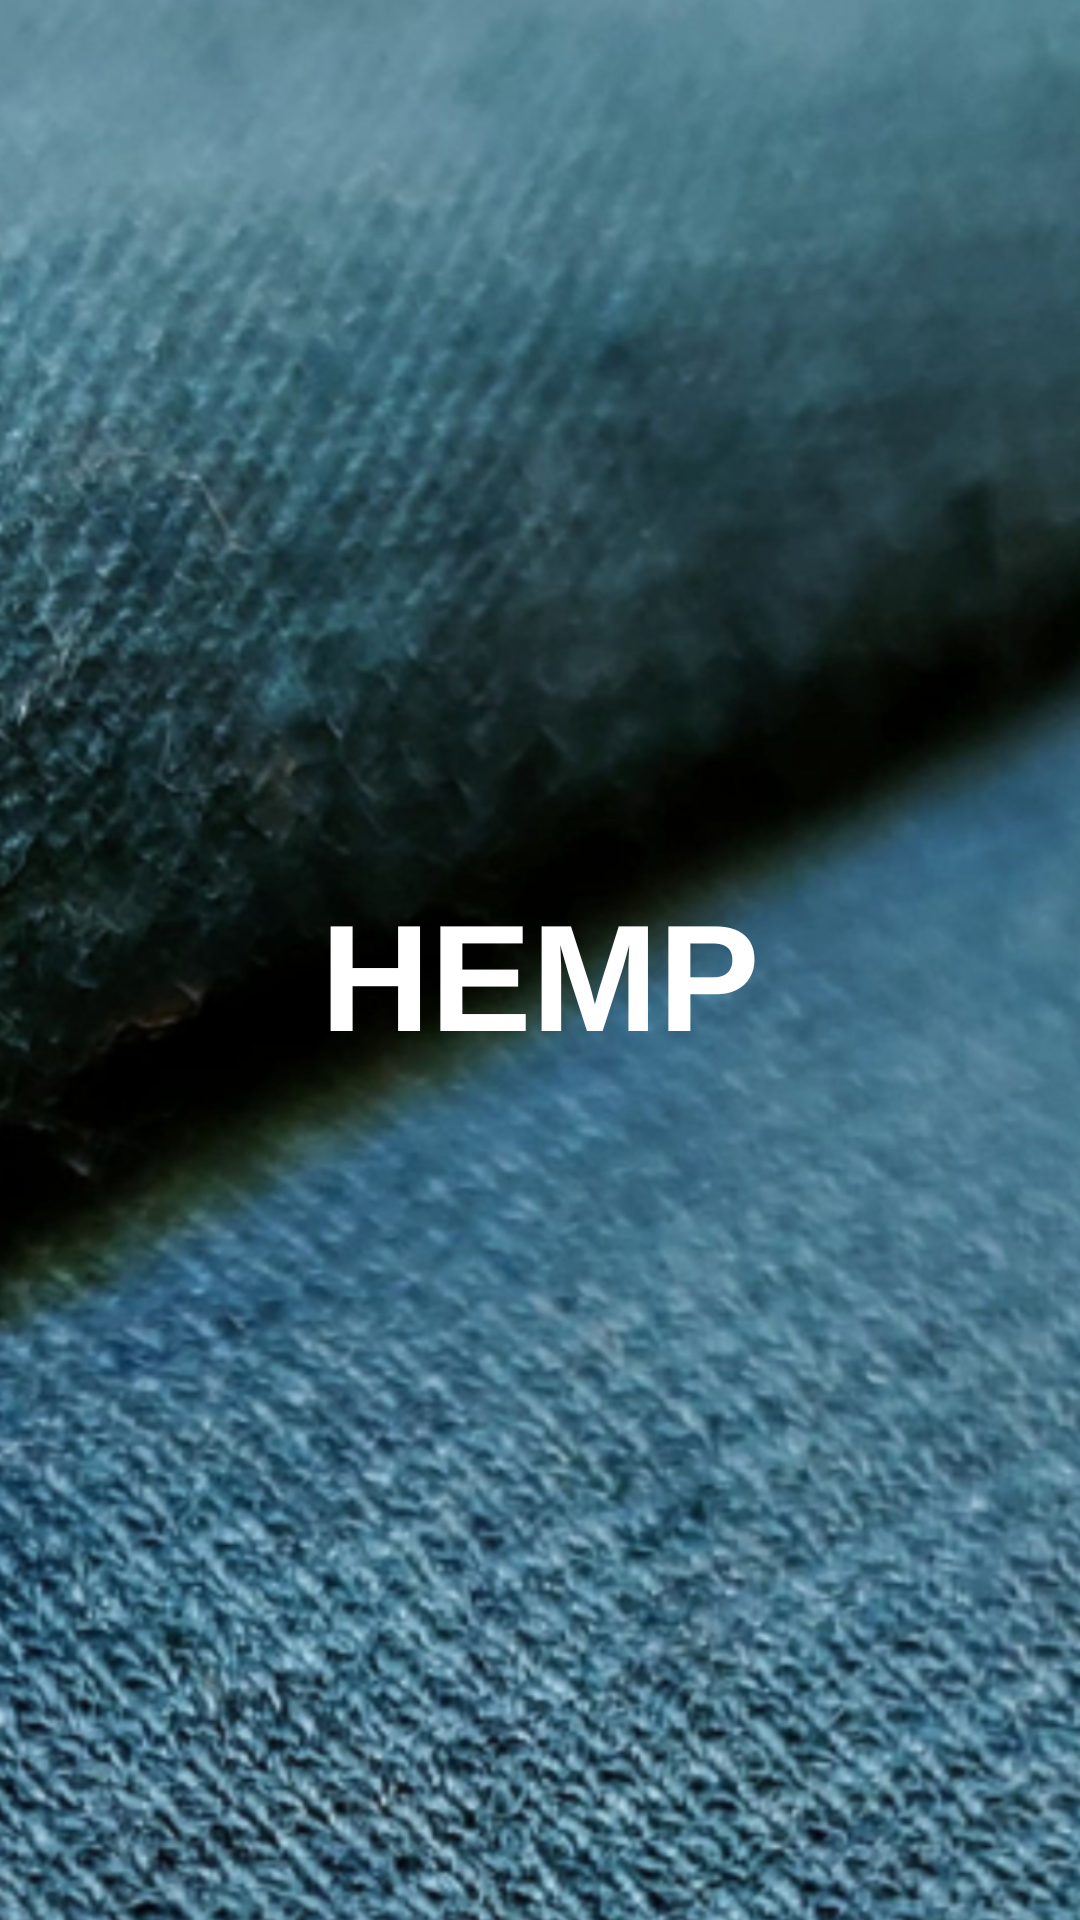 5752-hemp-apparel-eco-fashion.png